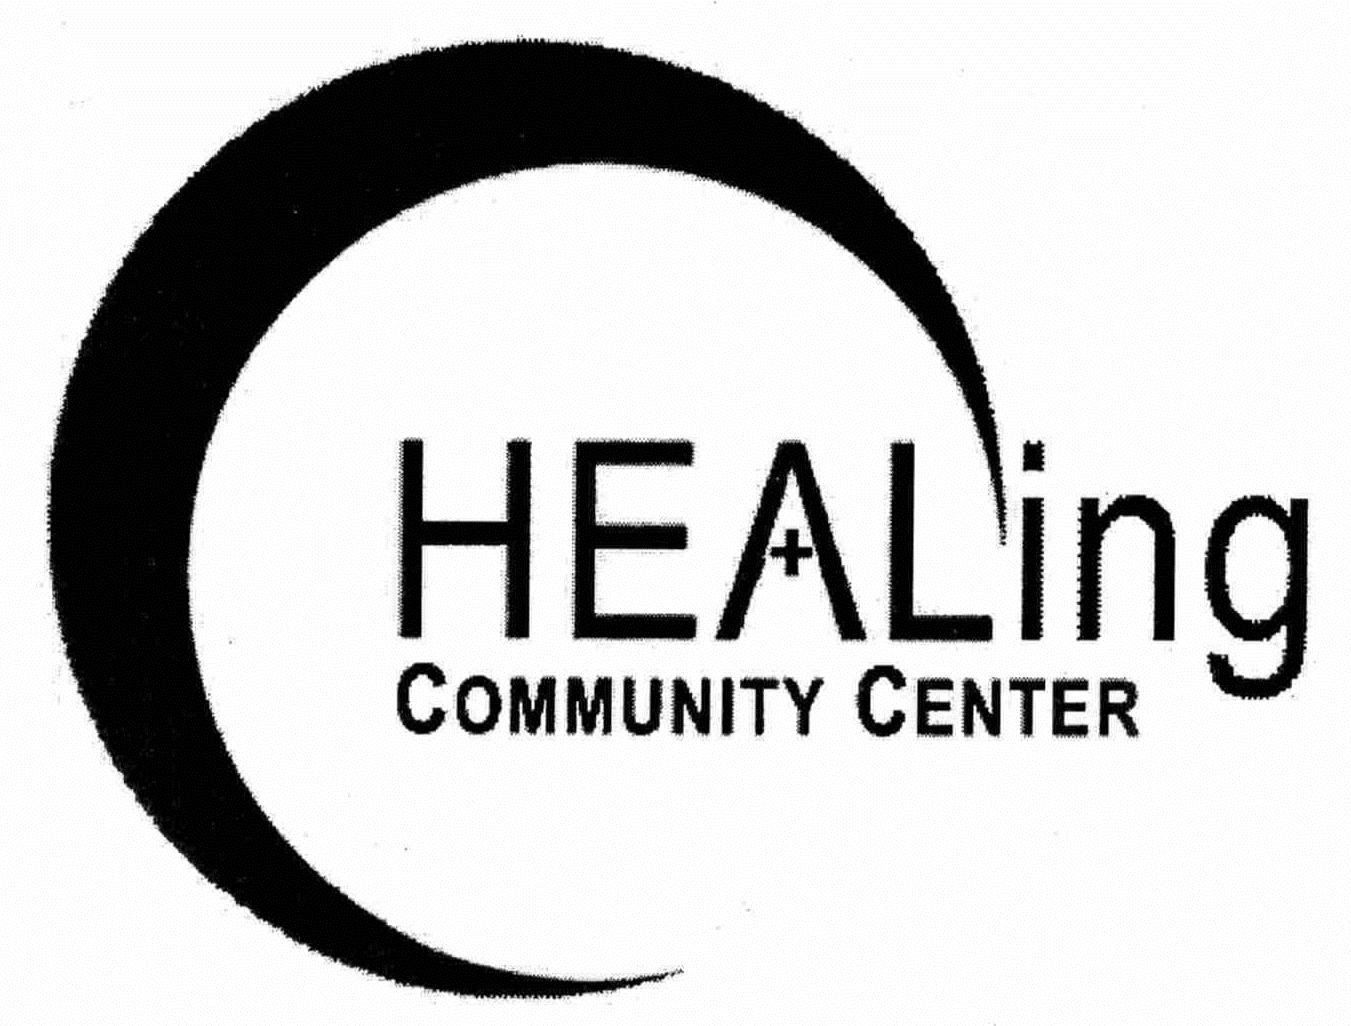  HEALING COMMUNITY CENTER